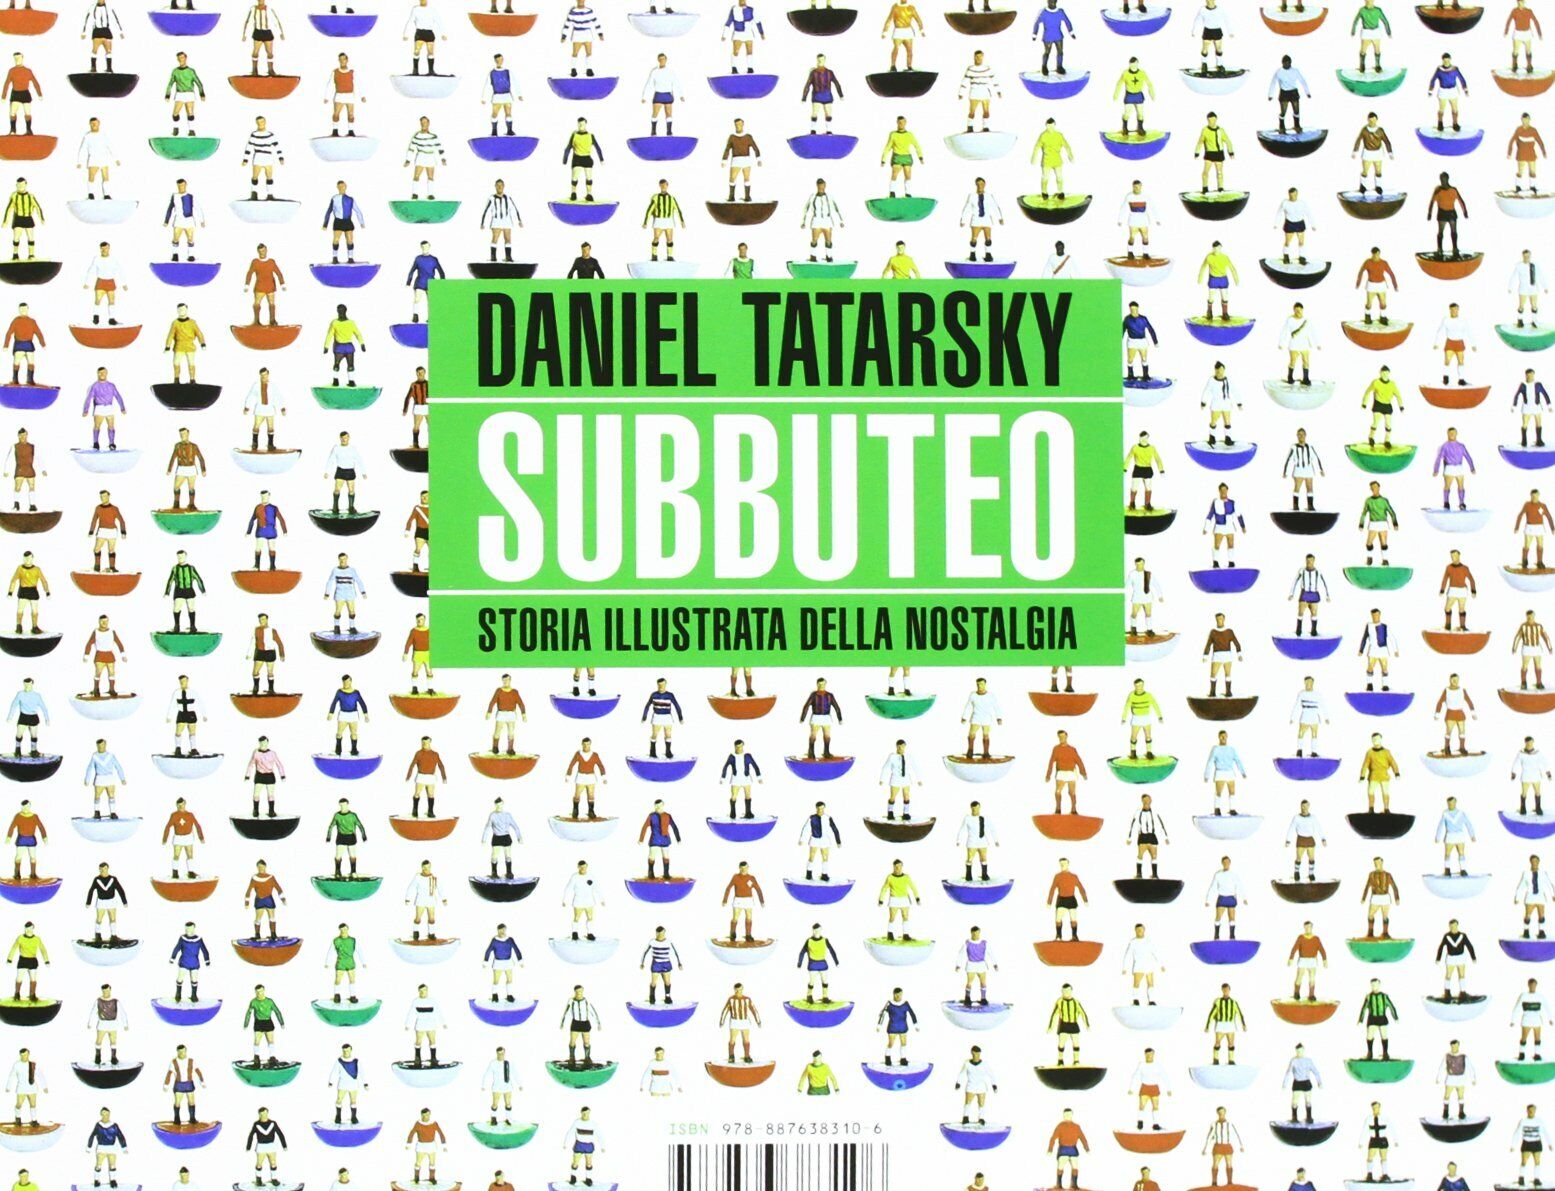 Subbuteo. Storia illustrata della nostalgia - Daniel Tatarsky - QRedizioni,2021